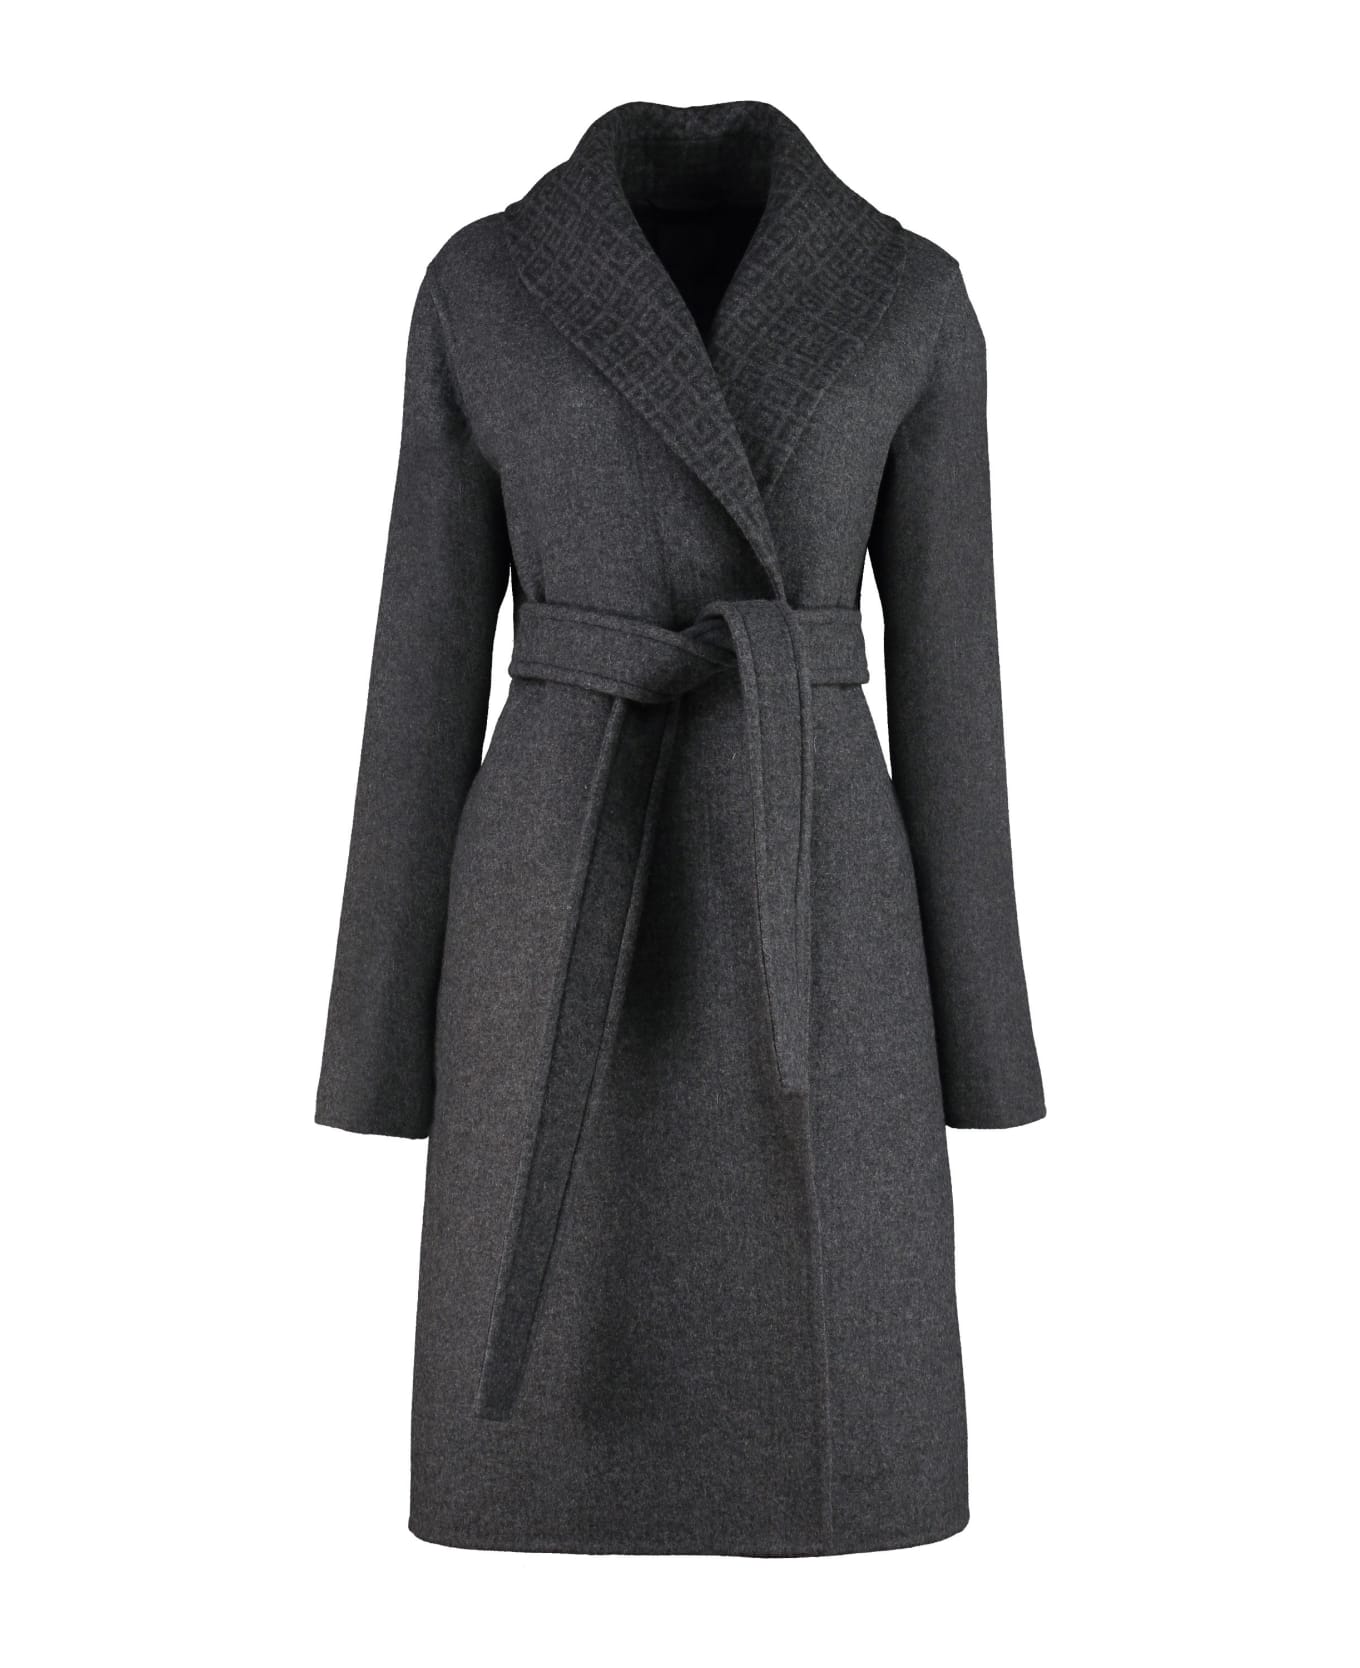 Givenchy Belted Coat - Grey/ deep black